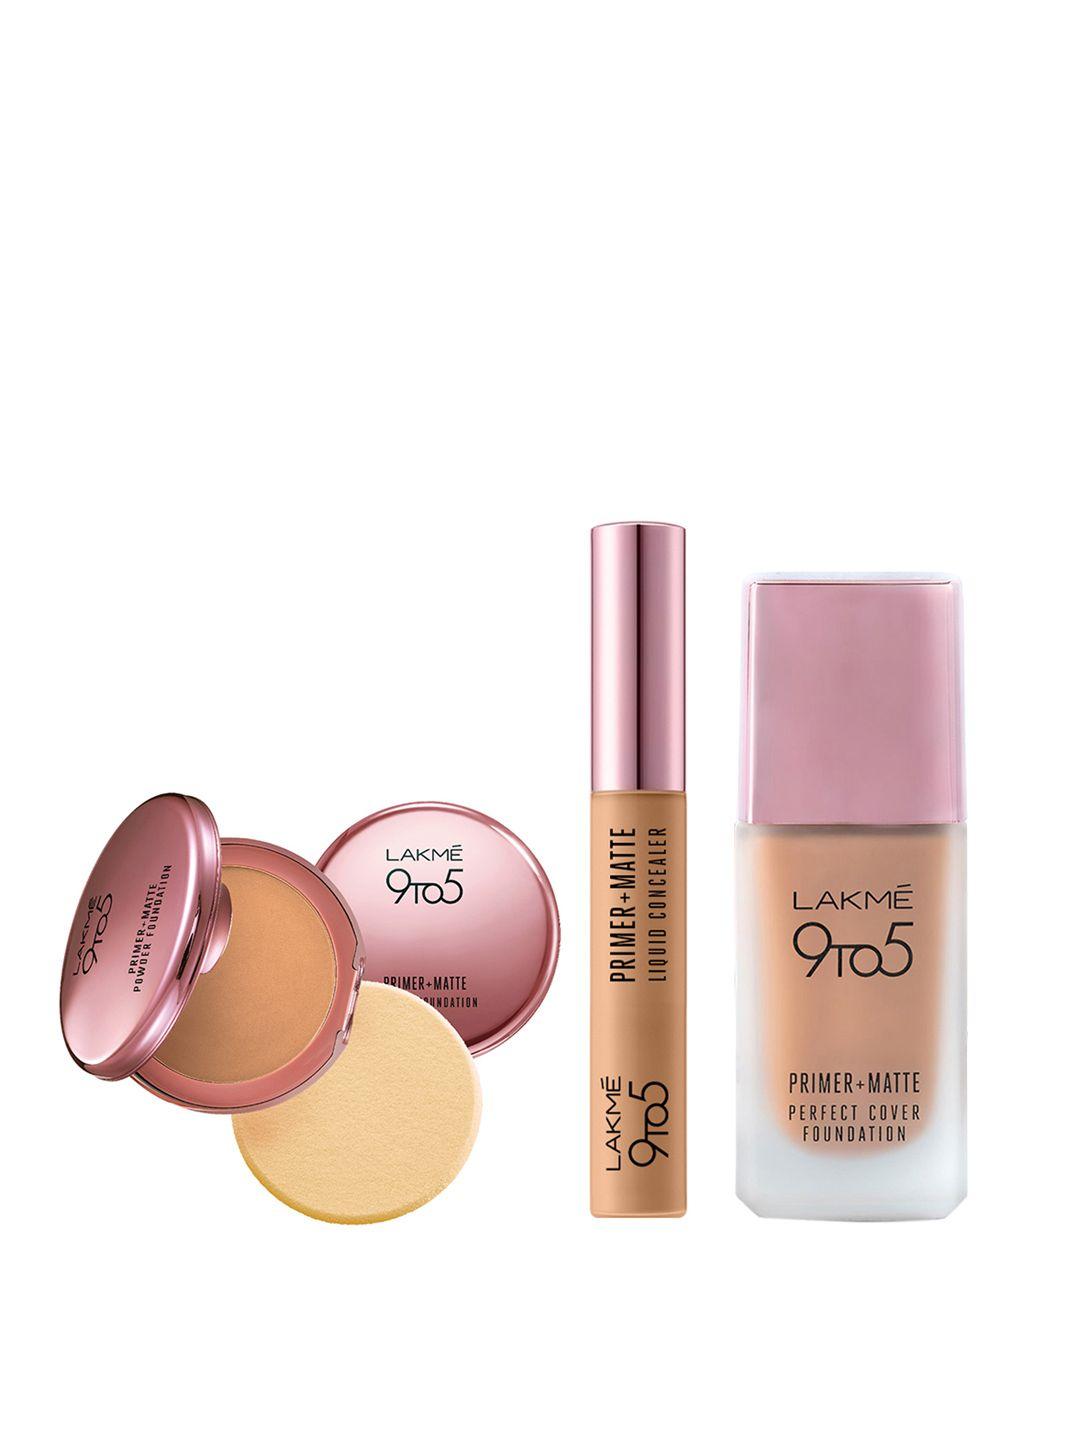 lakme 9to5 primer + matte makeup gift set - concealer + compact + foundation